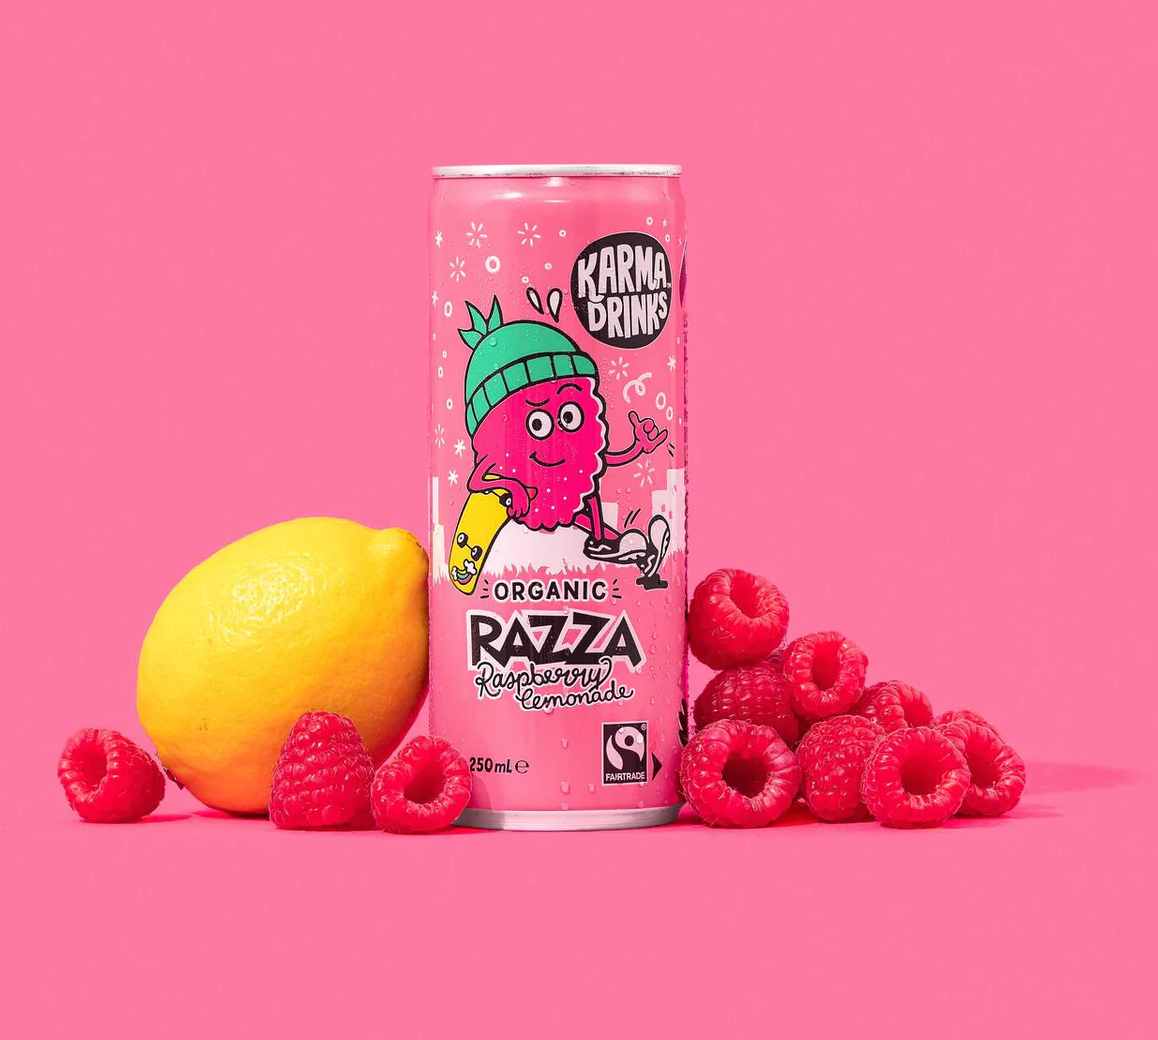 Karma Drinks - Organic Razza Raspberry Lemonade - 250ml